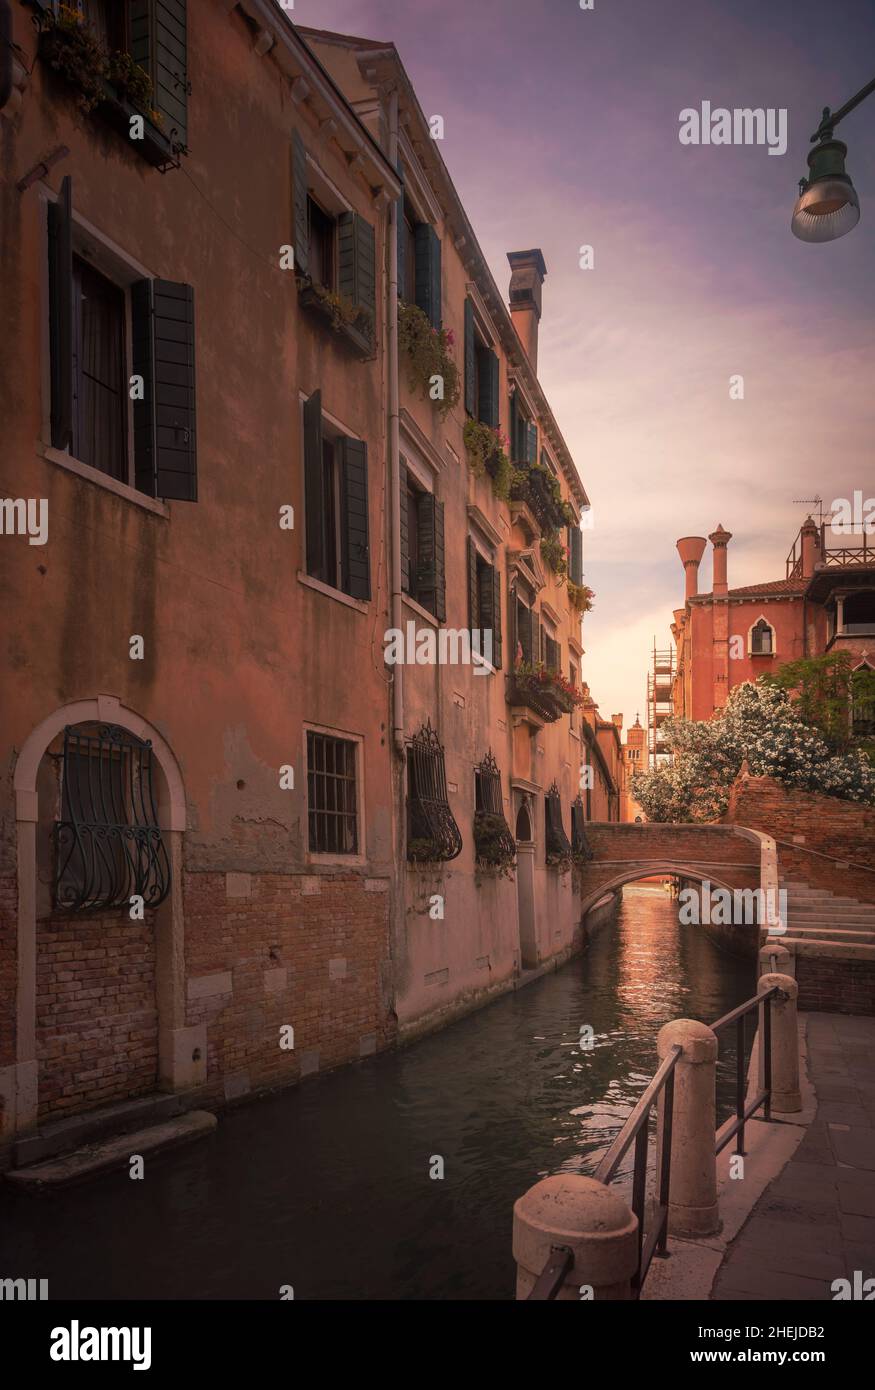 Venice cityscape, water canal, bridge and traditional buildings. Veneto region, Italy, Europe. Stock Photo